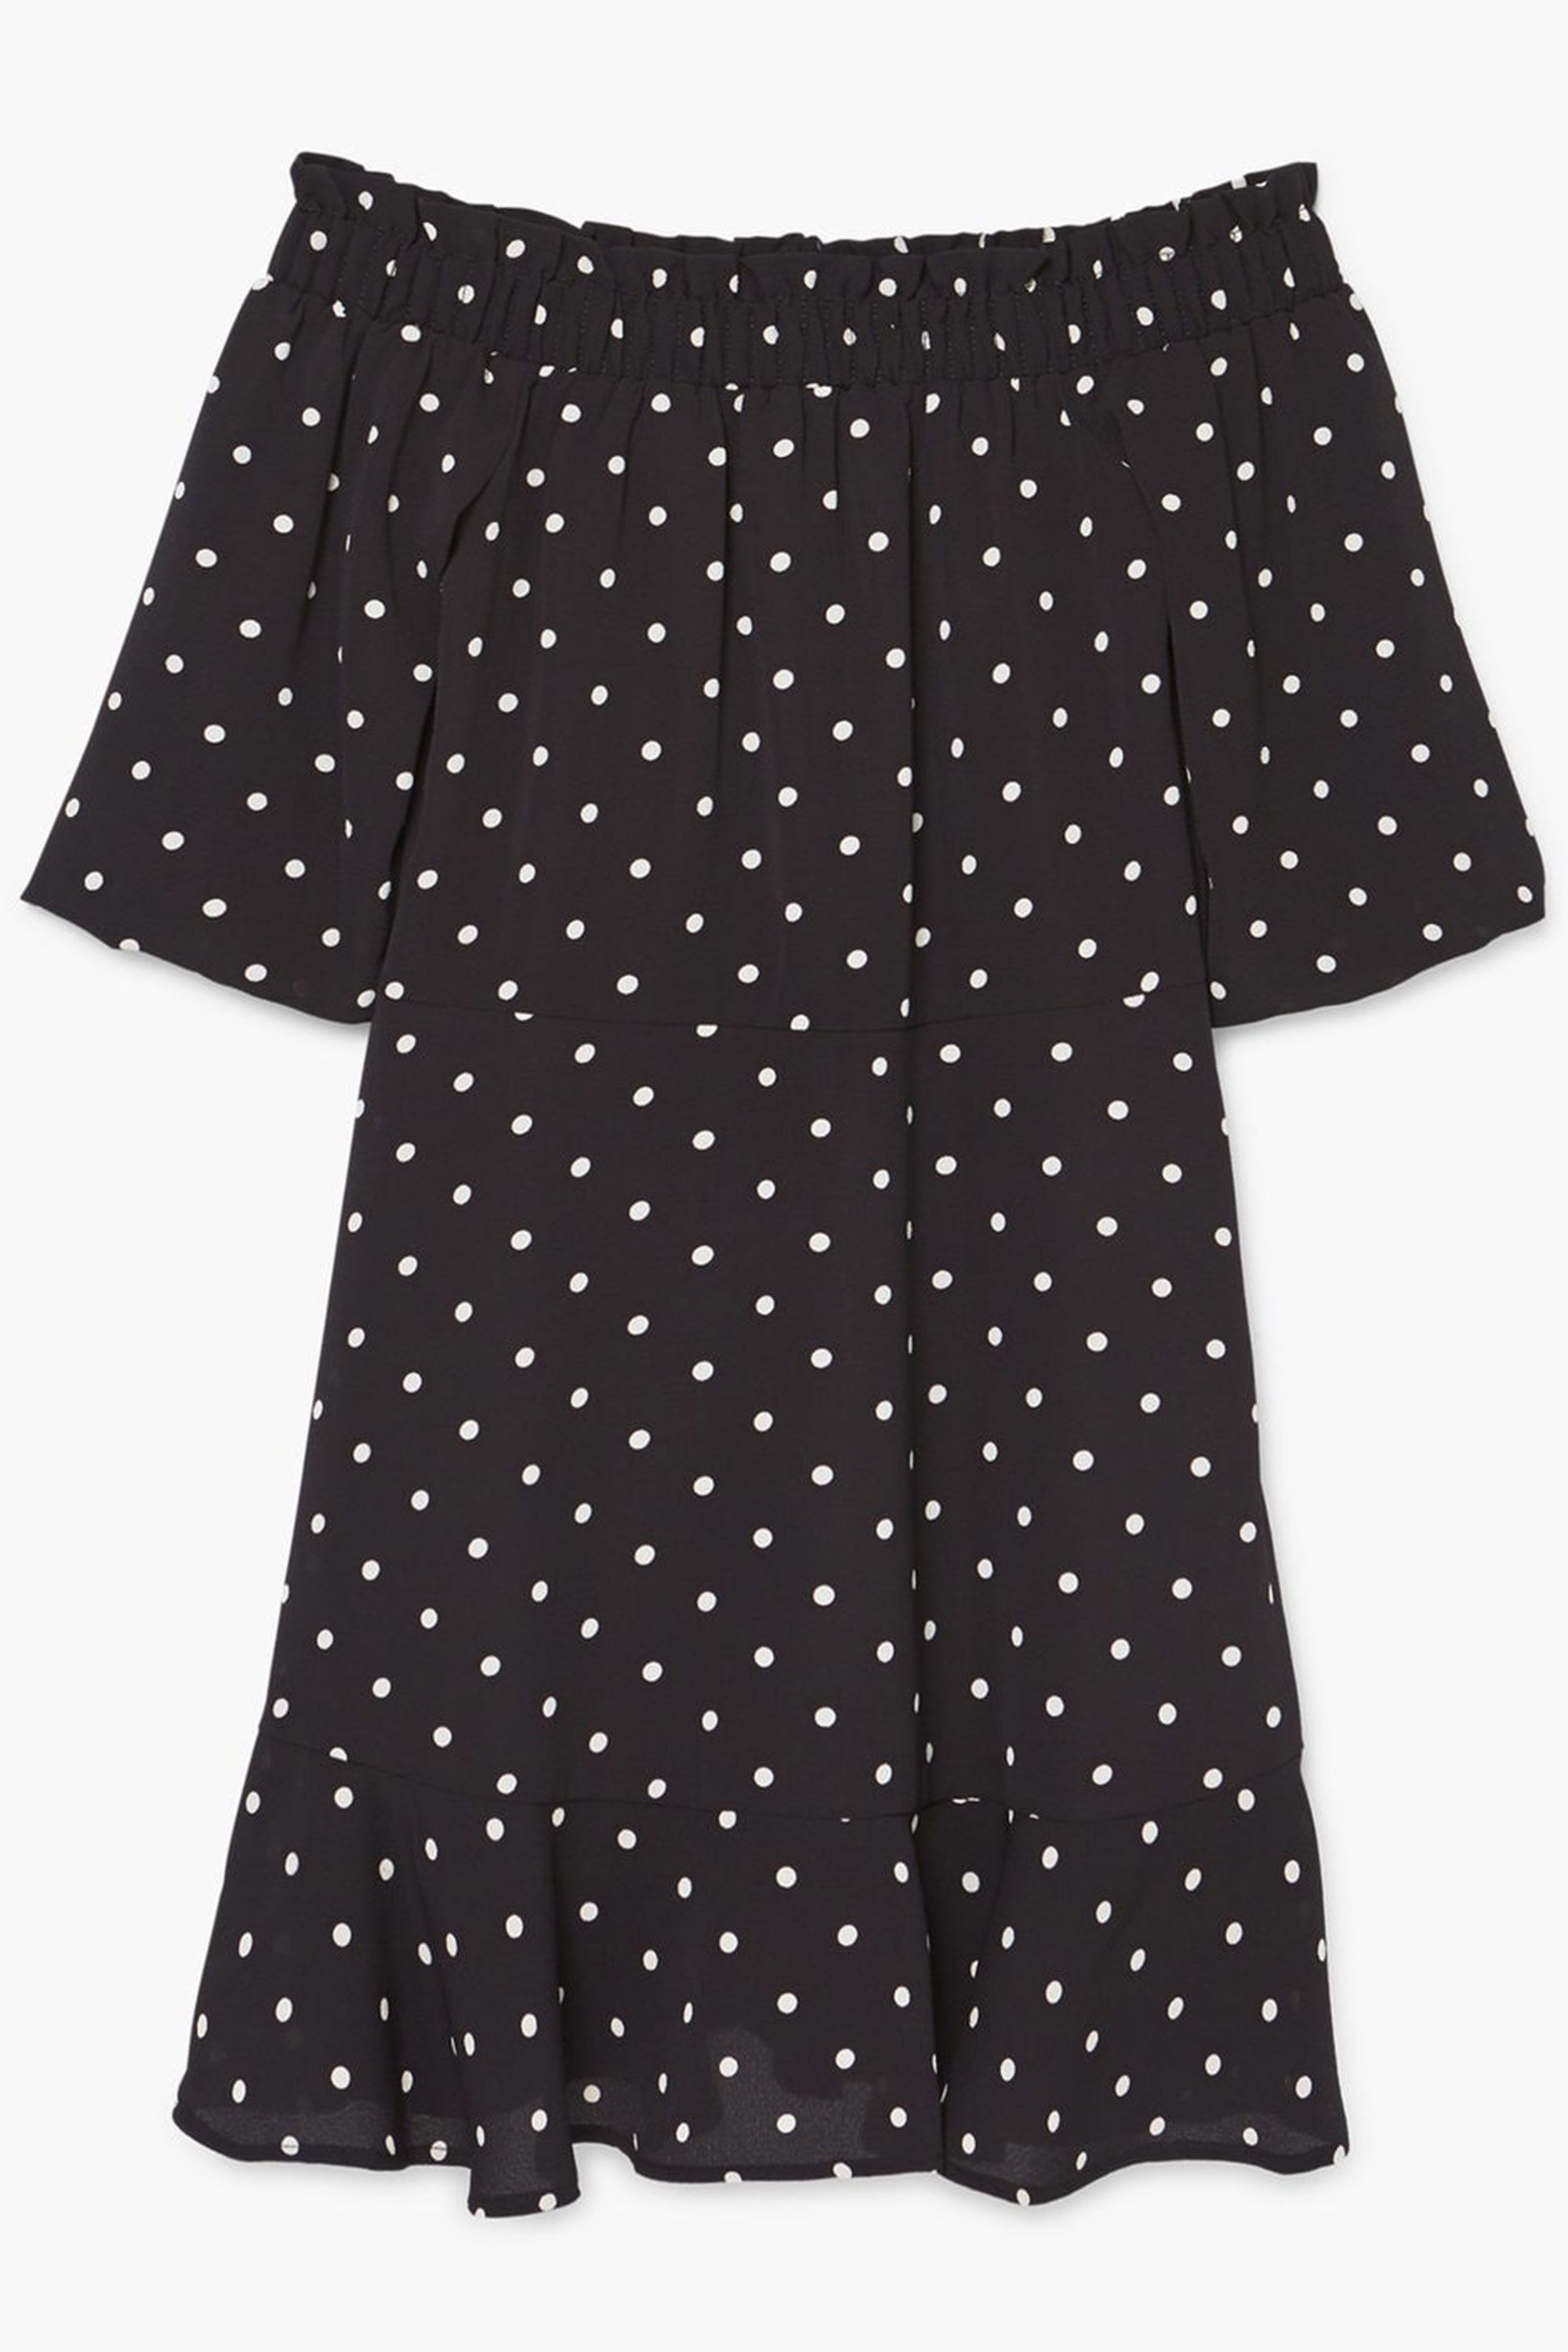 topshop black white polka dot dress